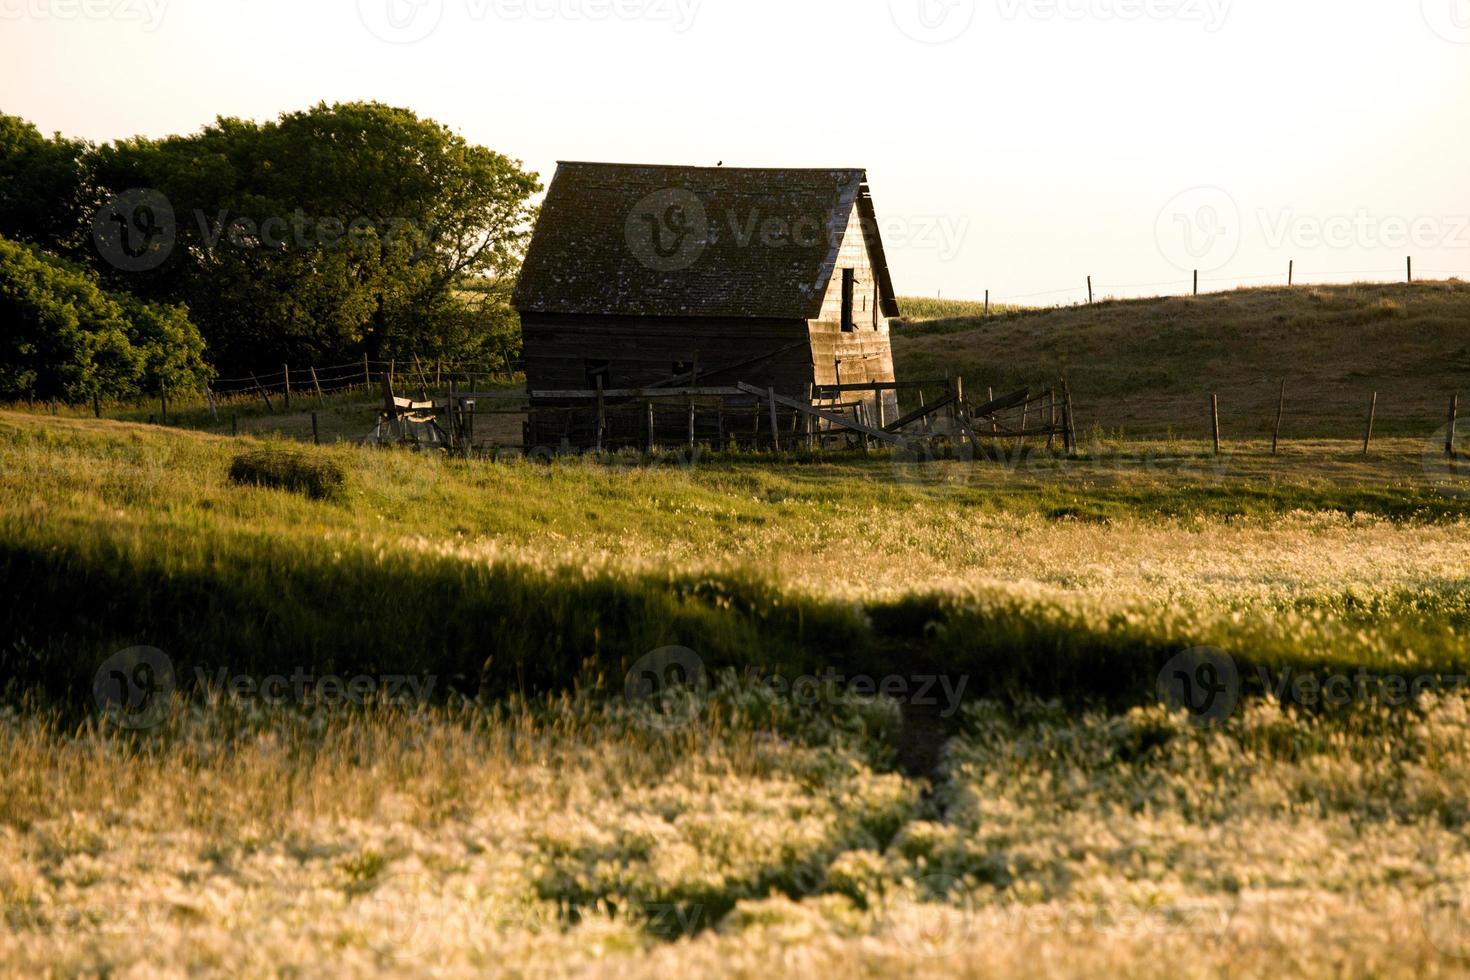 Prairie Barn Saskatchewan photo